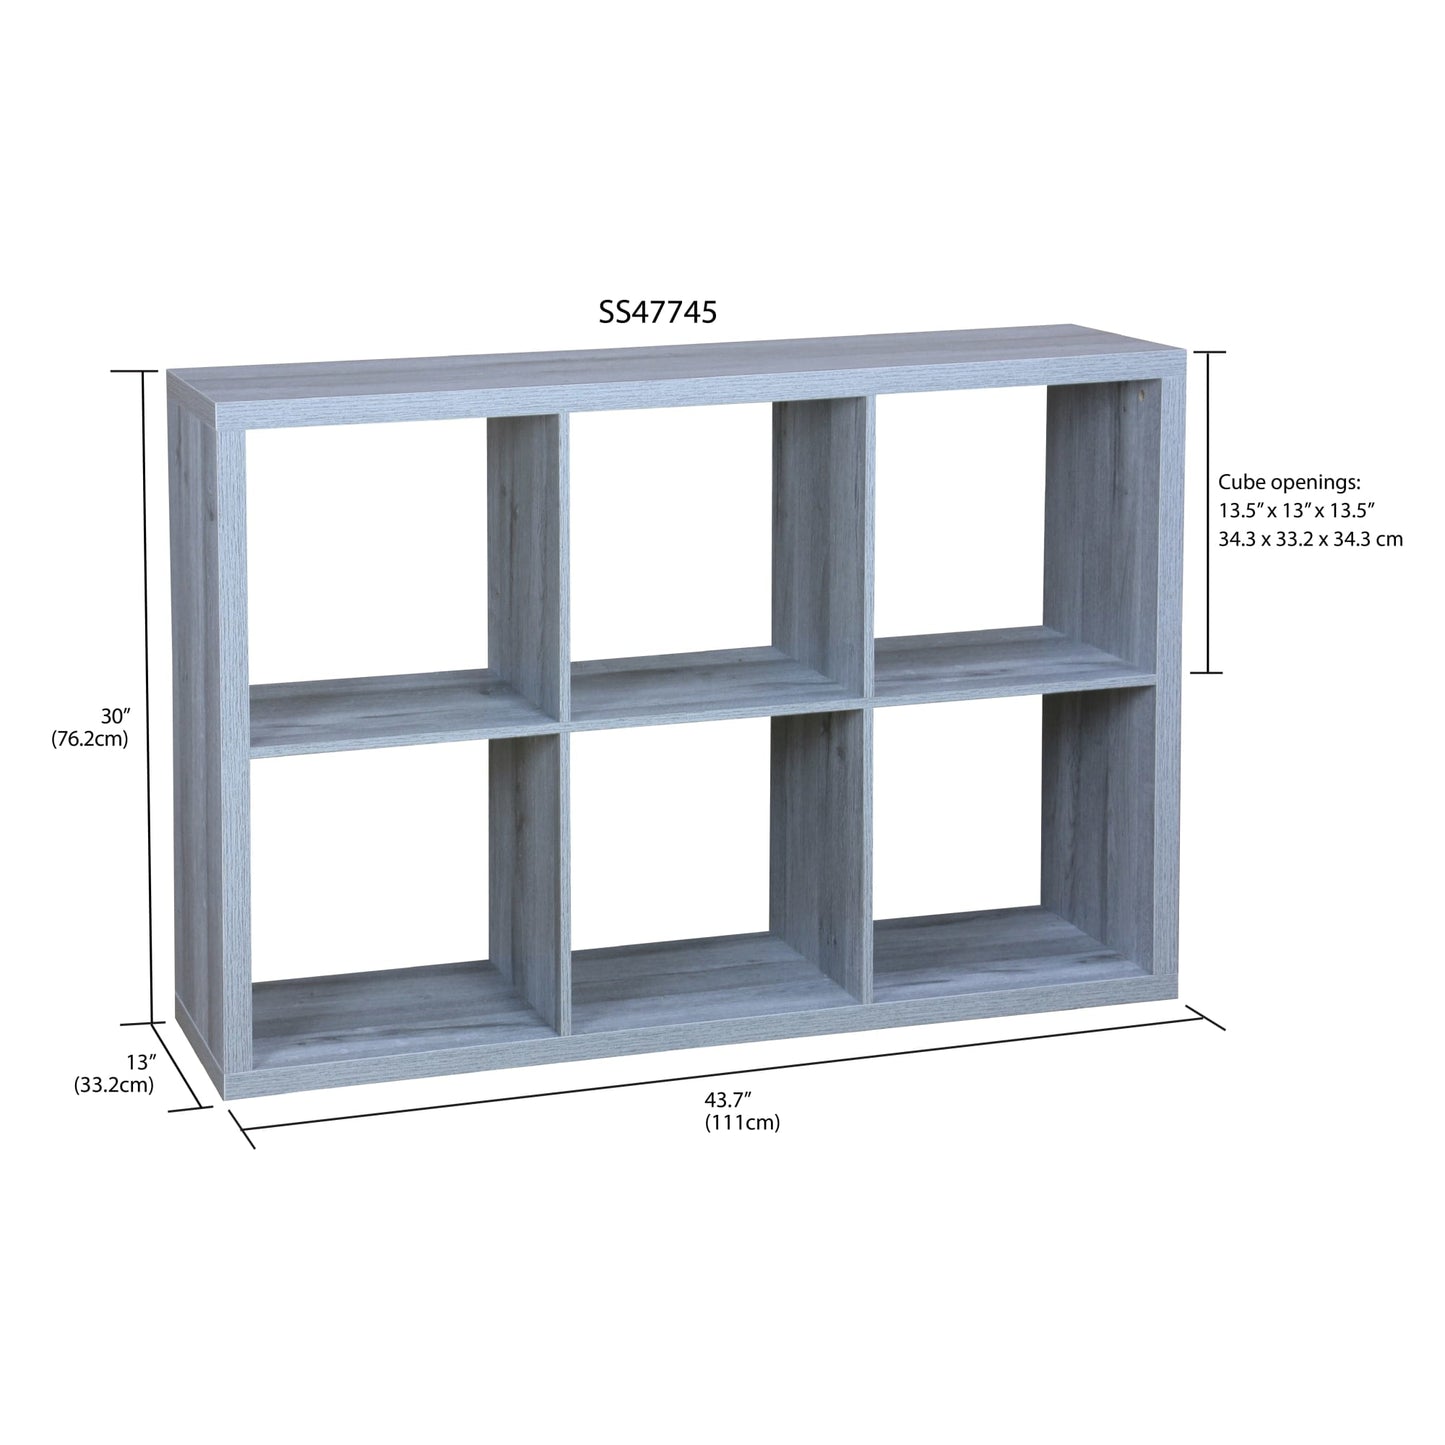 6 Open Cube Organizing Wood Storage Shelf, Grey